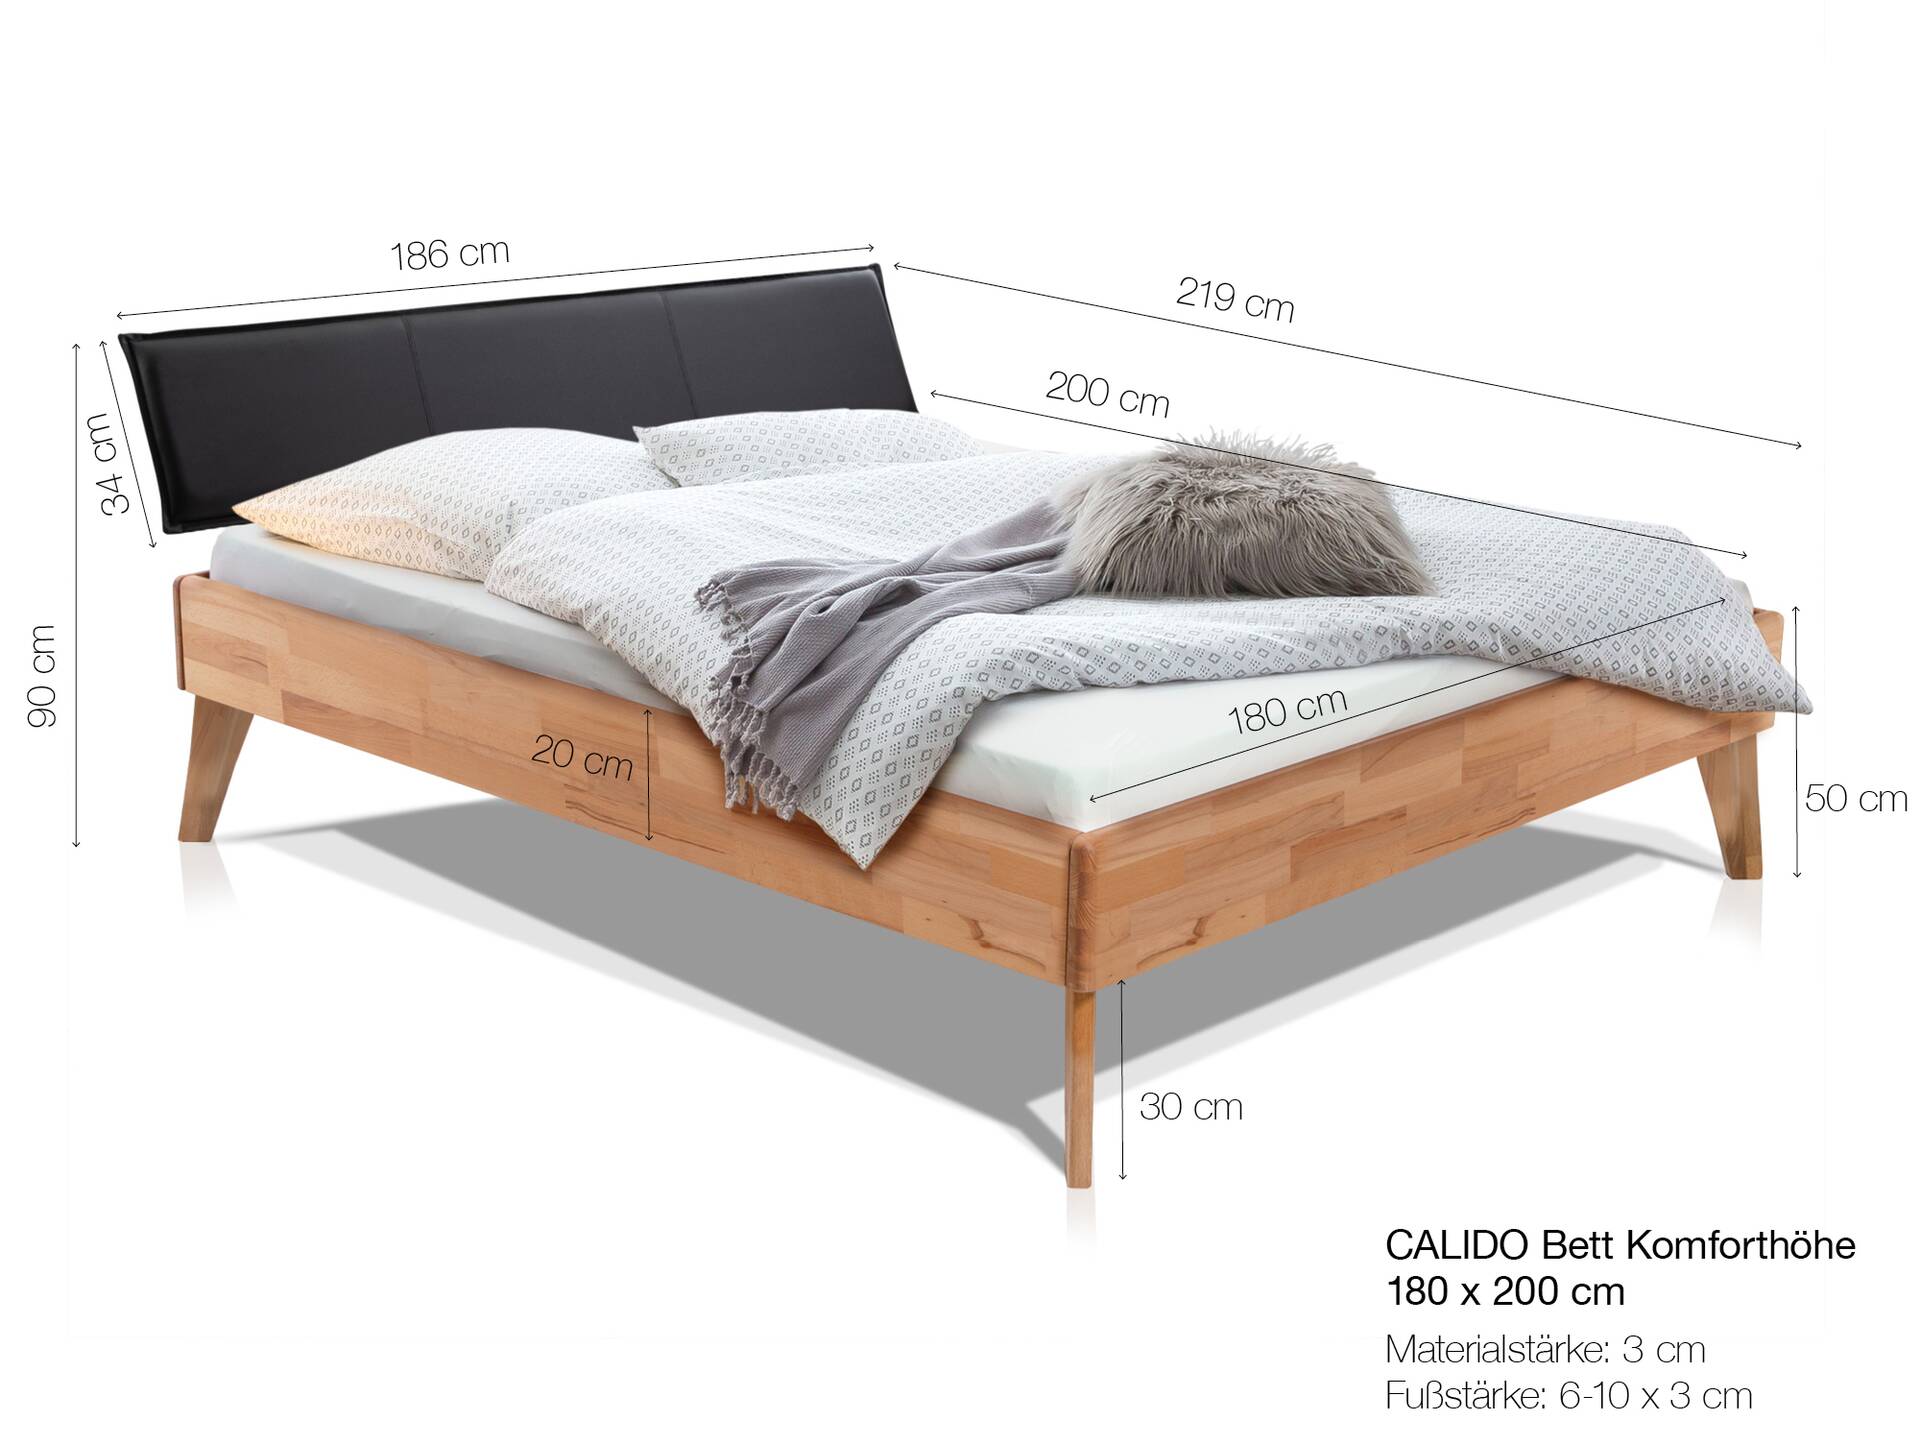 CALIDO 4-Fuß-Bett mit Polster-Kopfteil, Material Massivholz 180 x 200 cm | Buche weiss lackiert | Stoff Braun | Komforthöhe